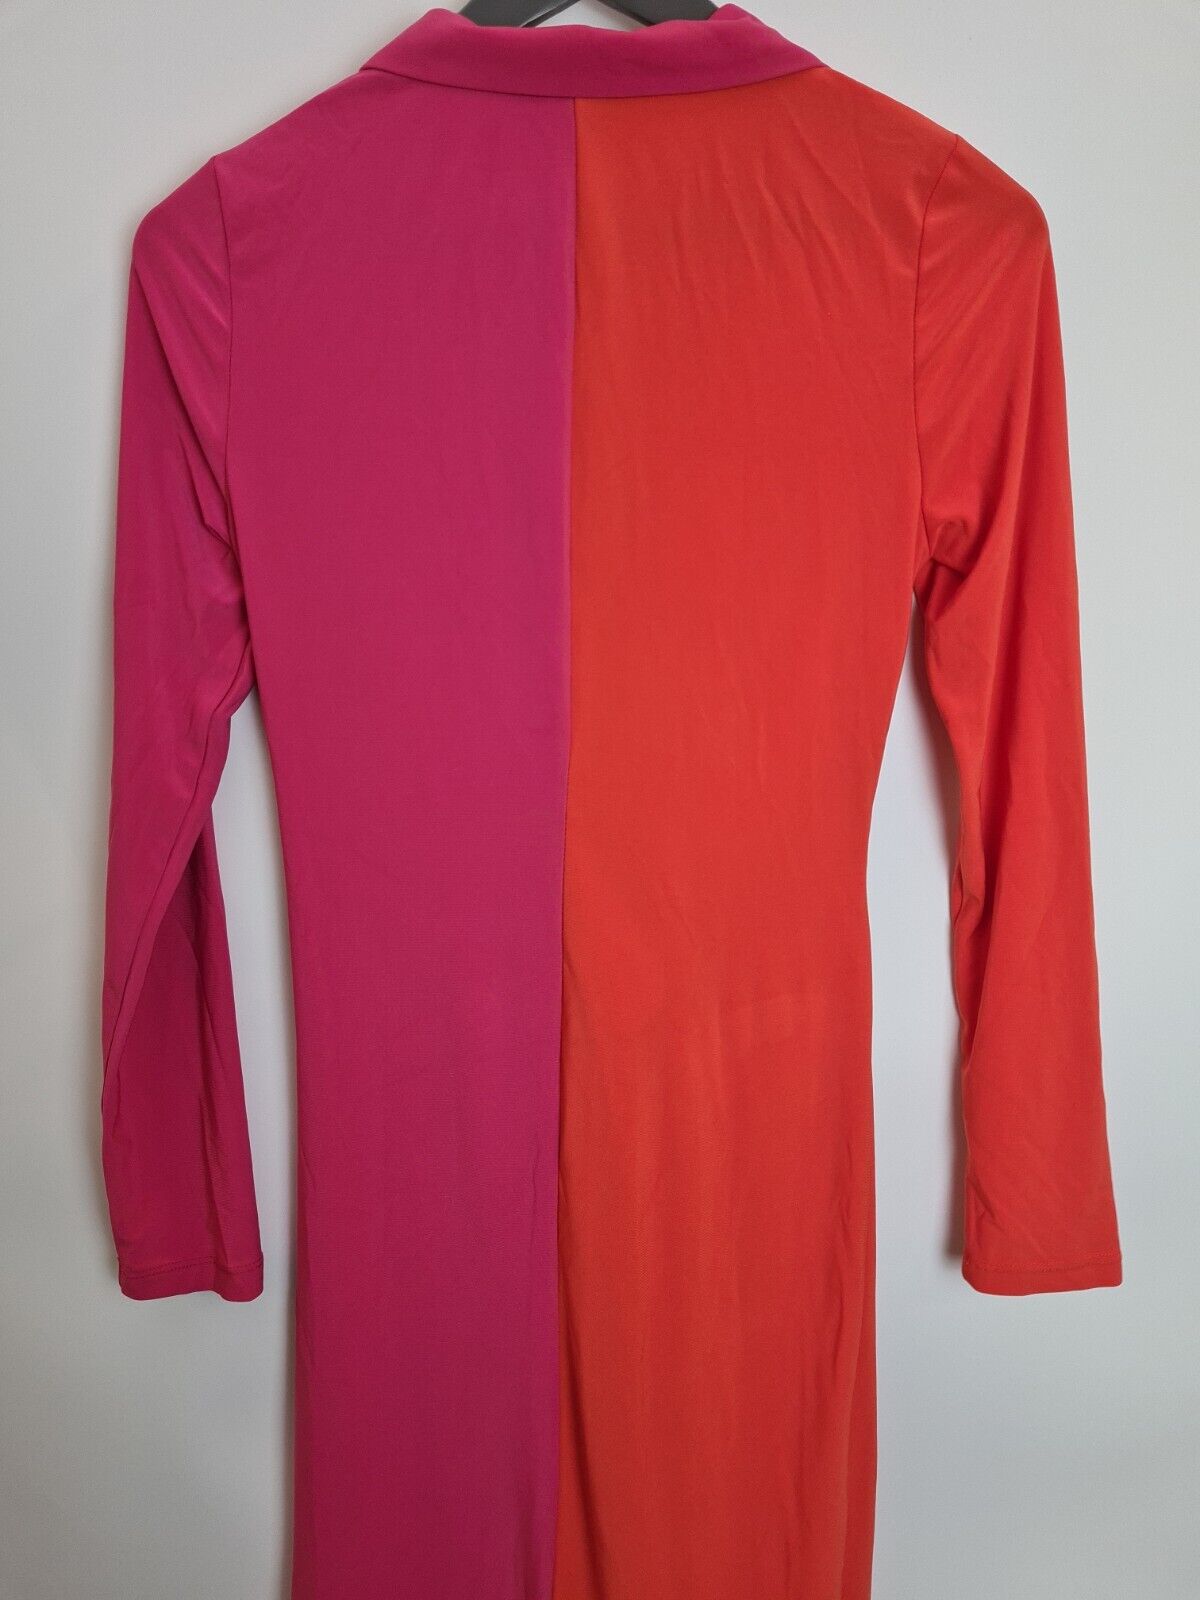 Never Fully Dressed Pink And Orange Colour Block Dress Size UK 6 **** V211